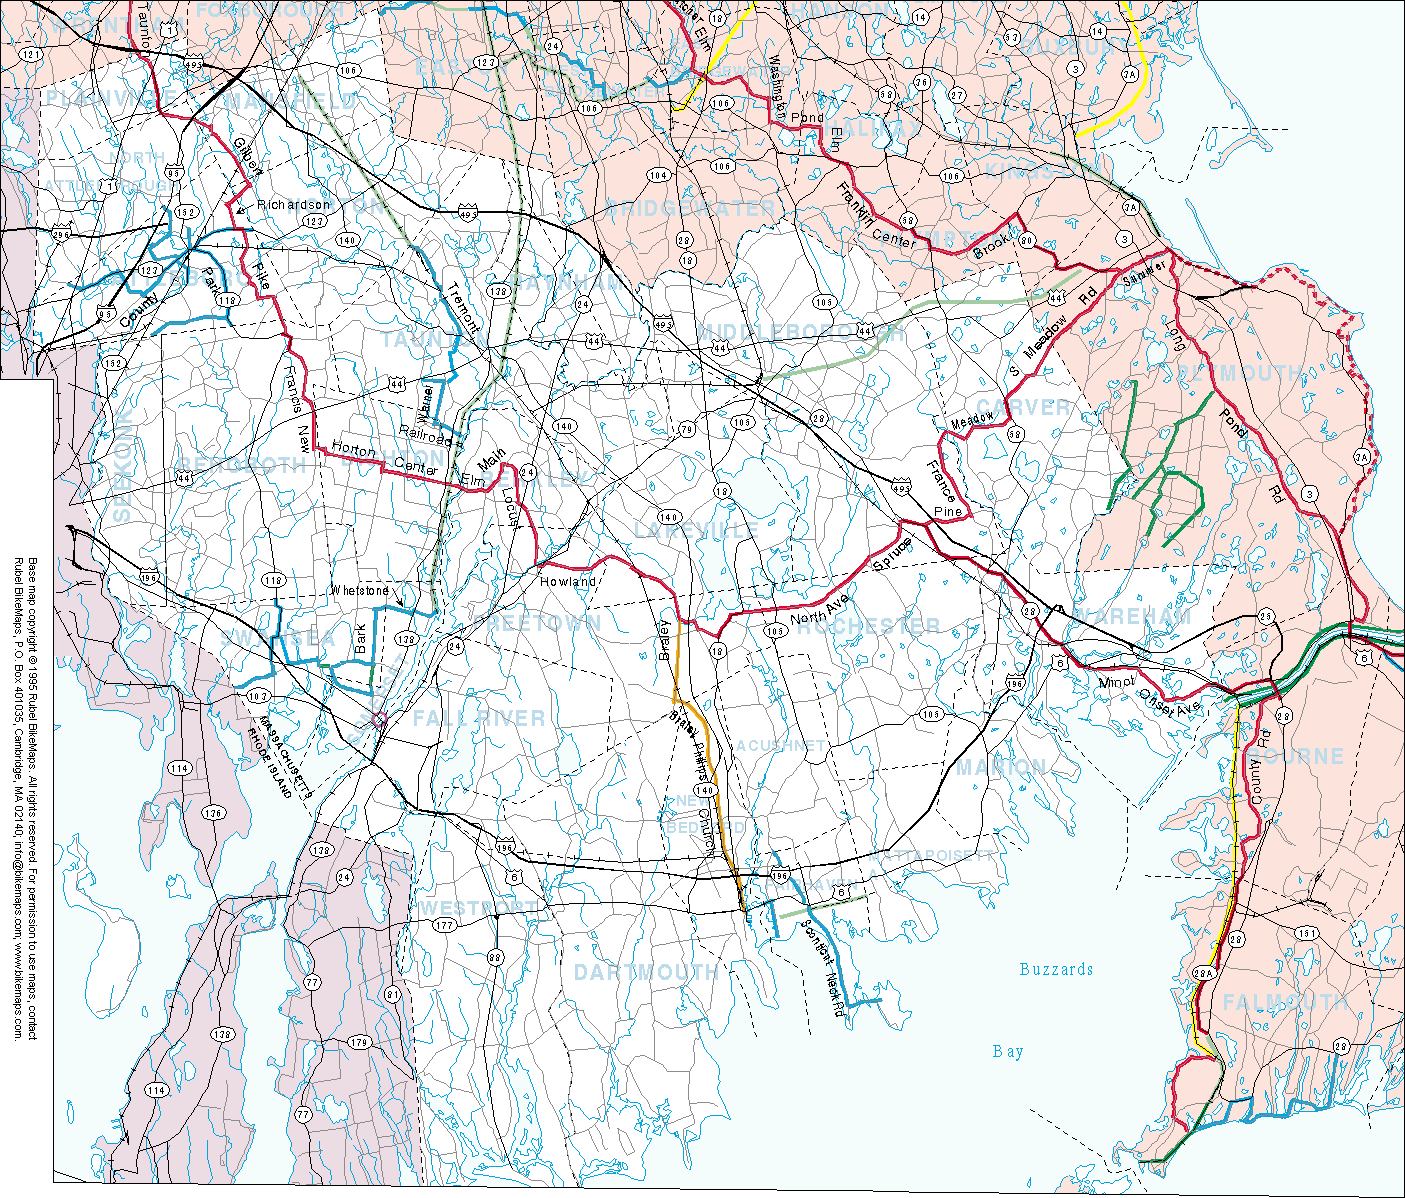 Southeaster Regional map (198 kB)